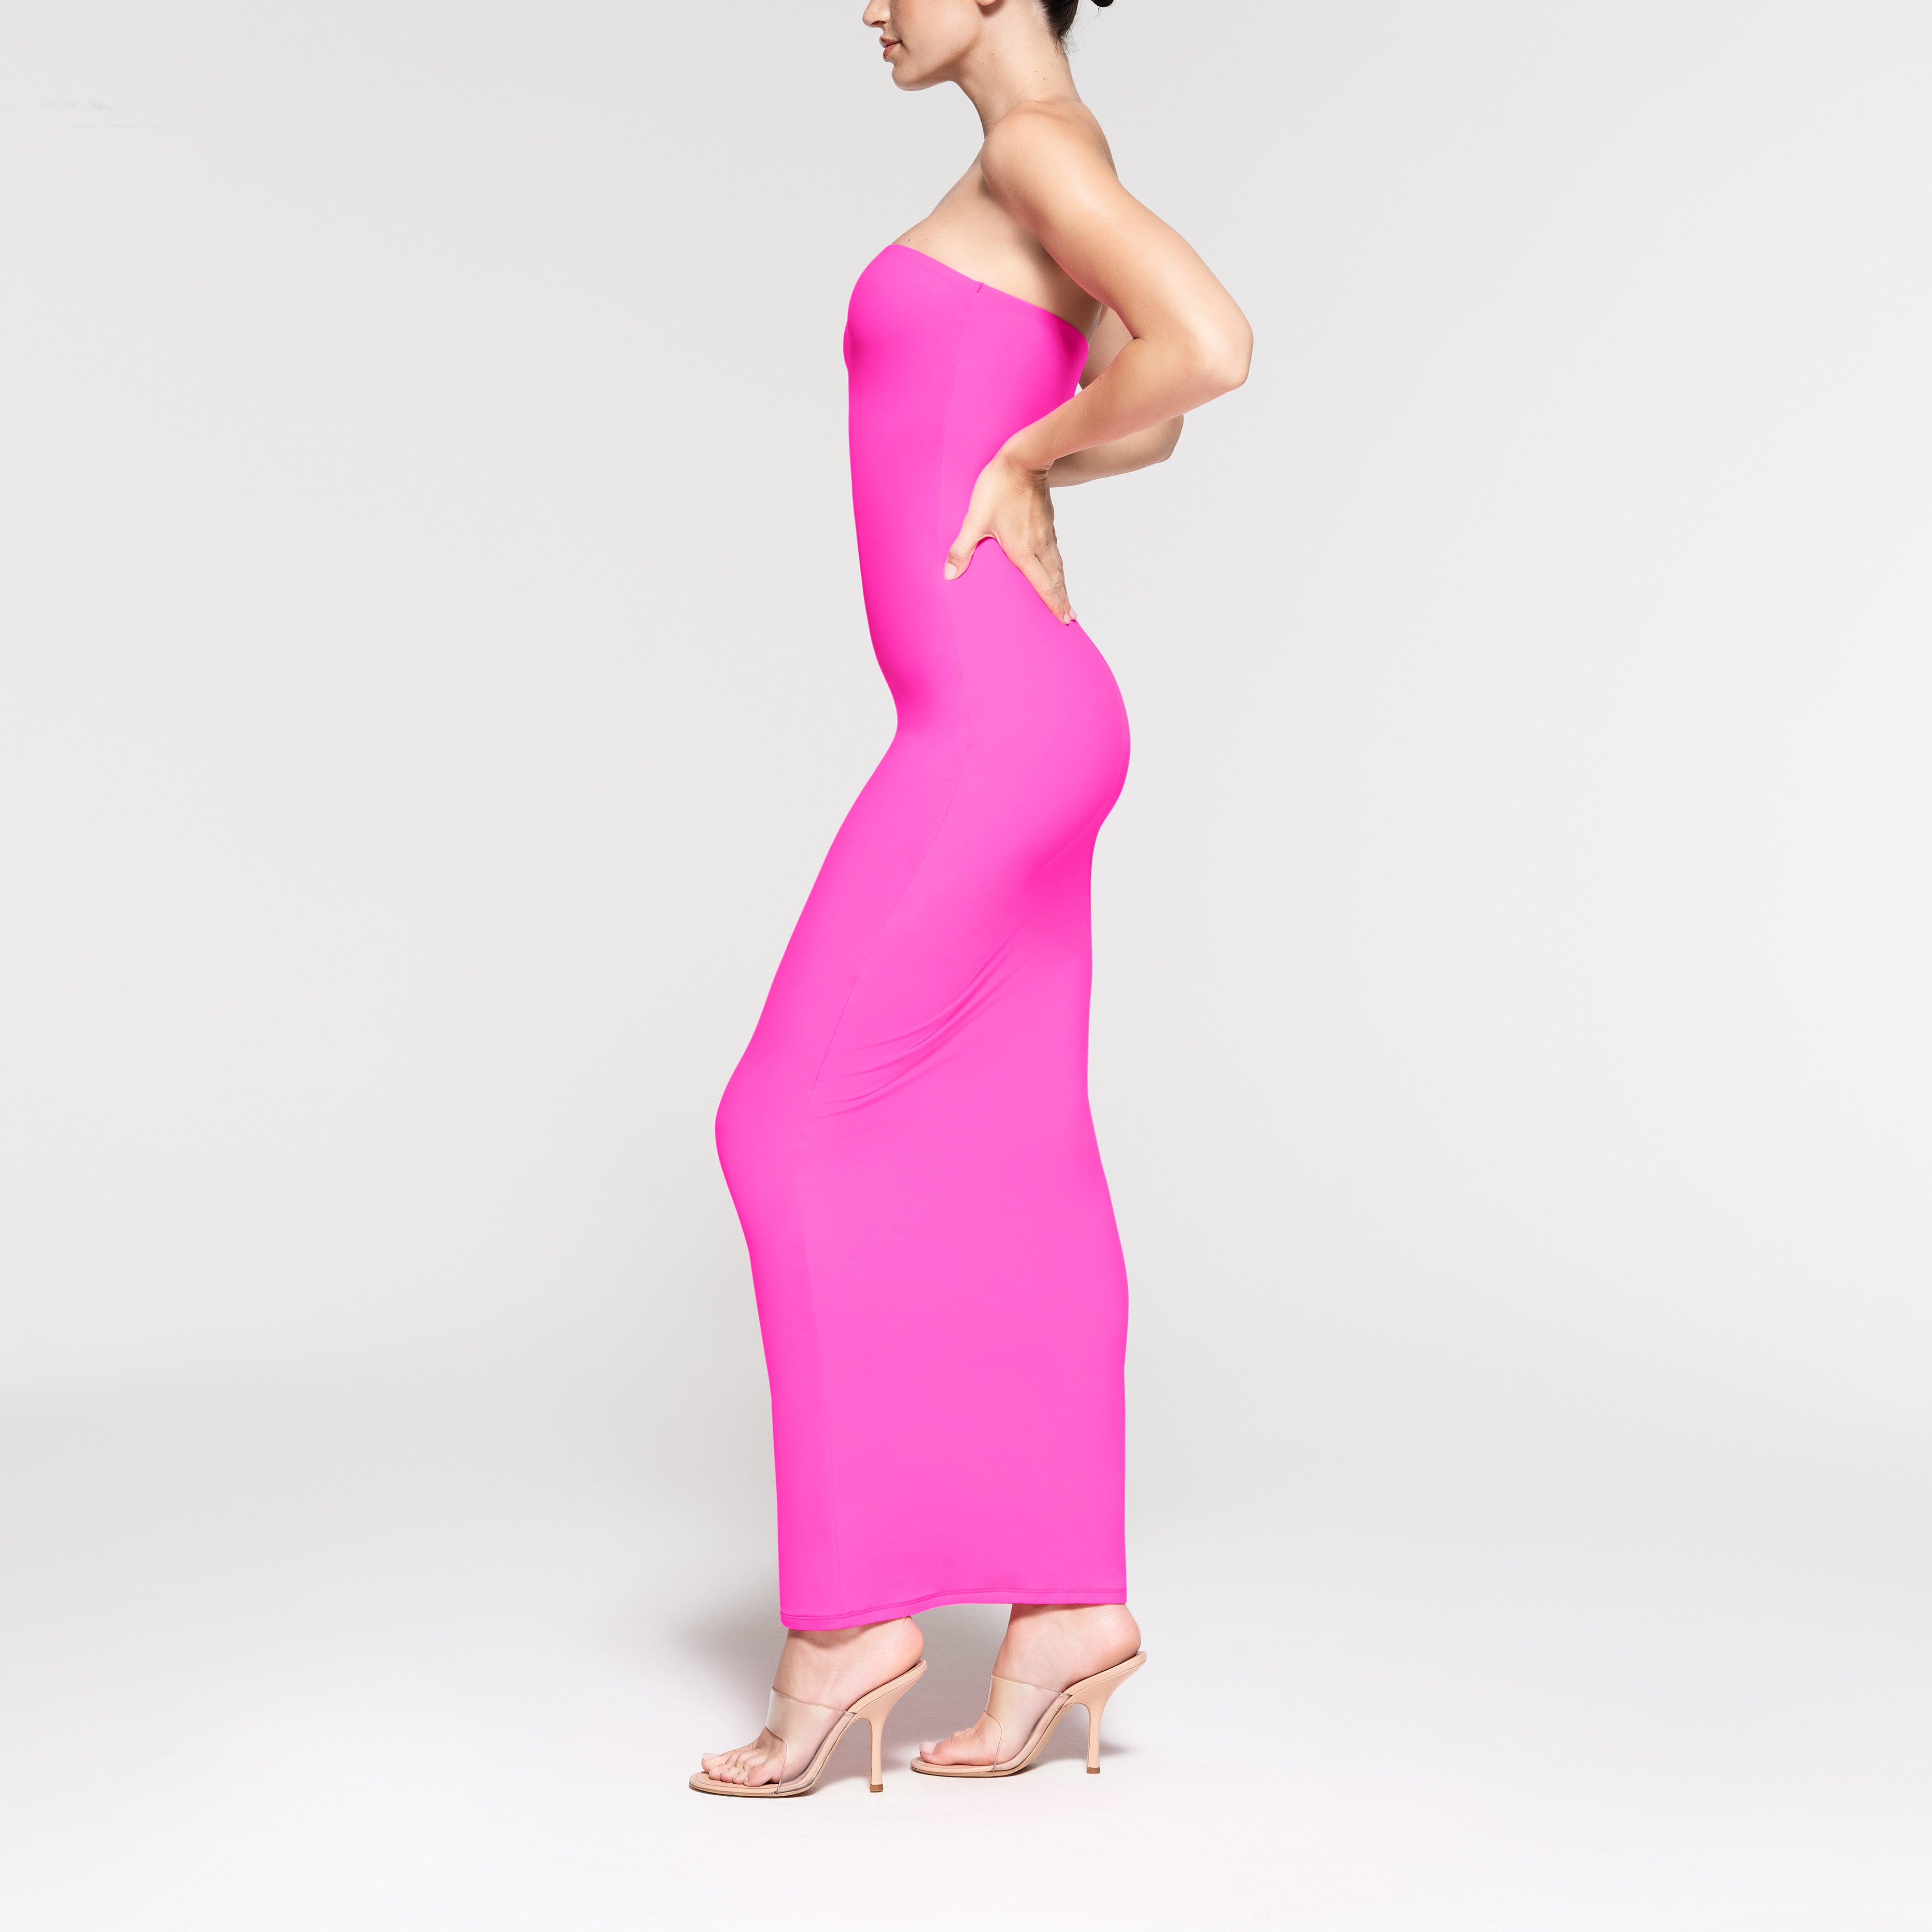 skims pink dress